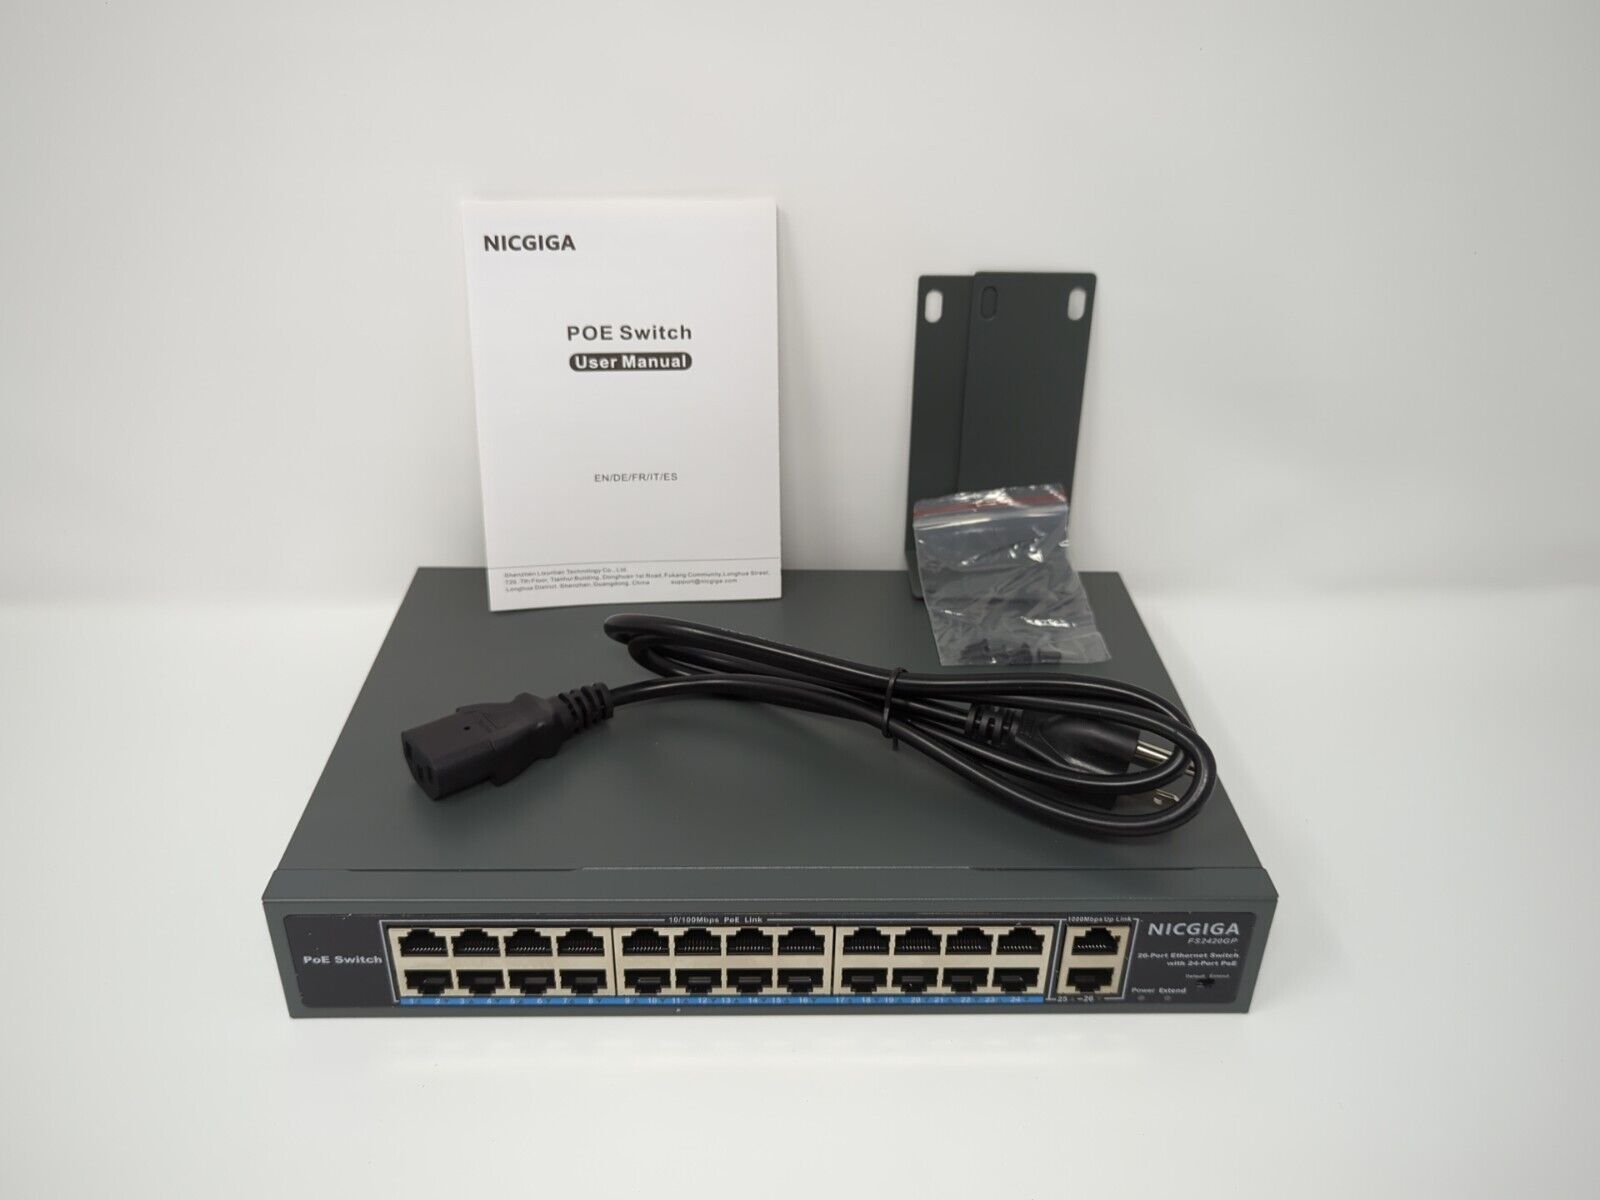 NICGIGA 26 Port PoE Switch, 24 Ports 10/100Mbps Ethernet Switch